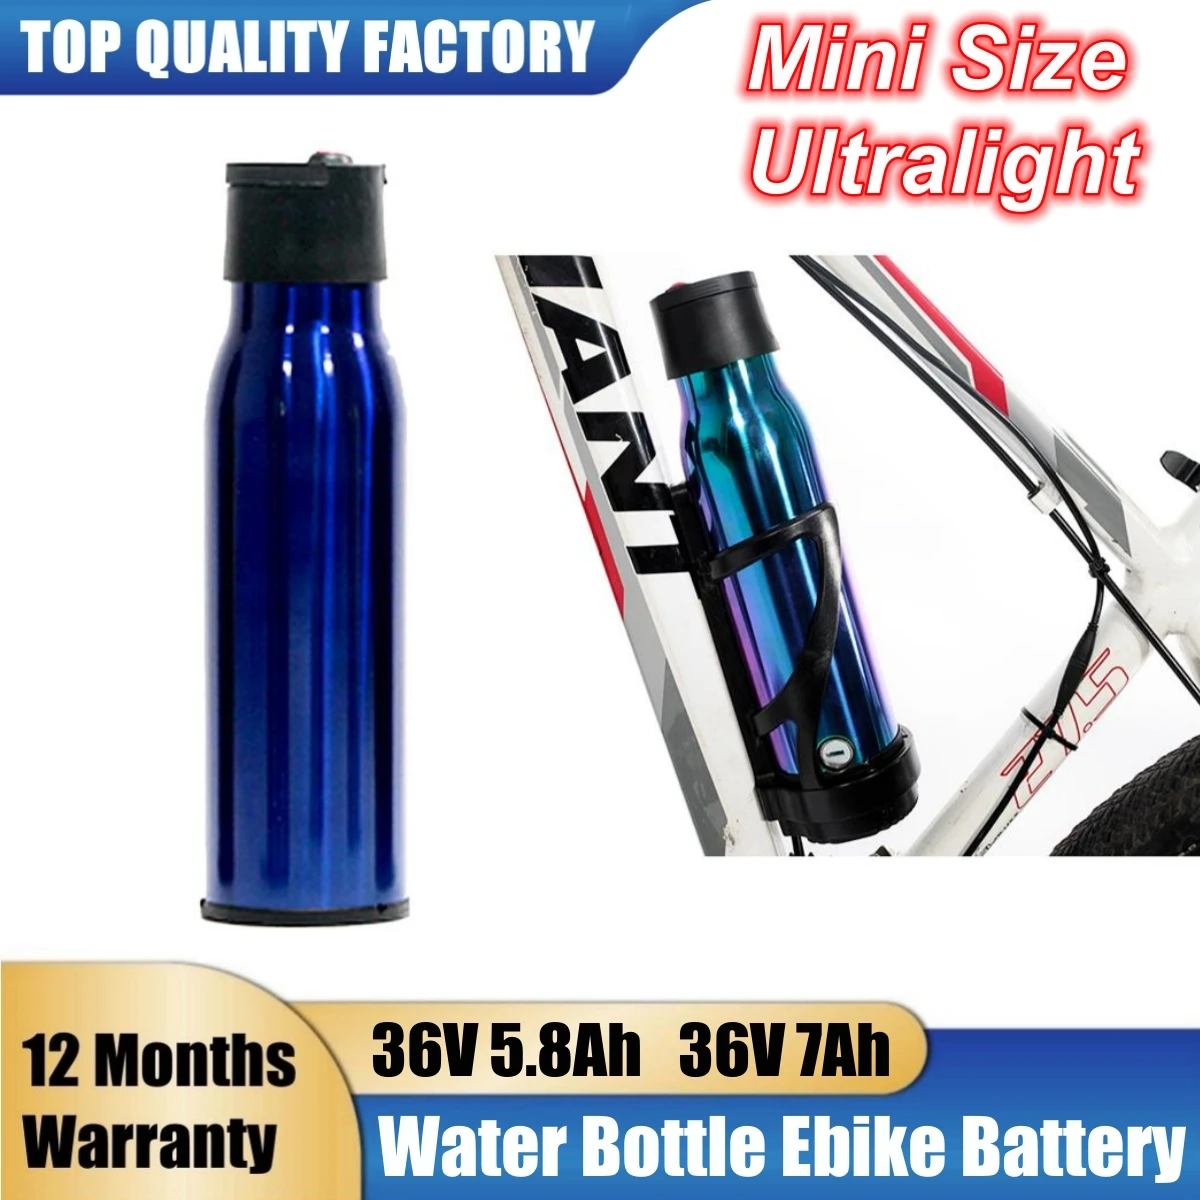 

36v Mini Water Bottle Battery Pack 36 Volt 5.8Ah 7Ah Lithium Ion Ebike Small Kettle Type Ultralight Batteries